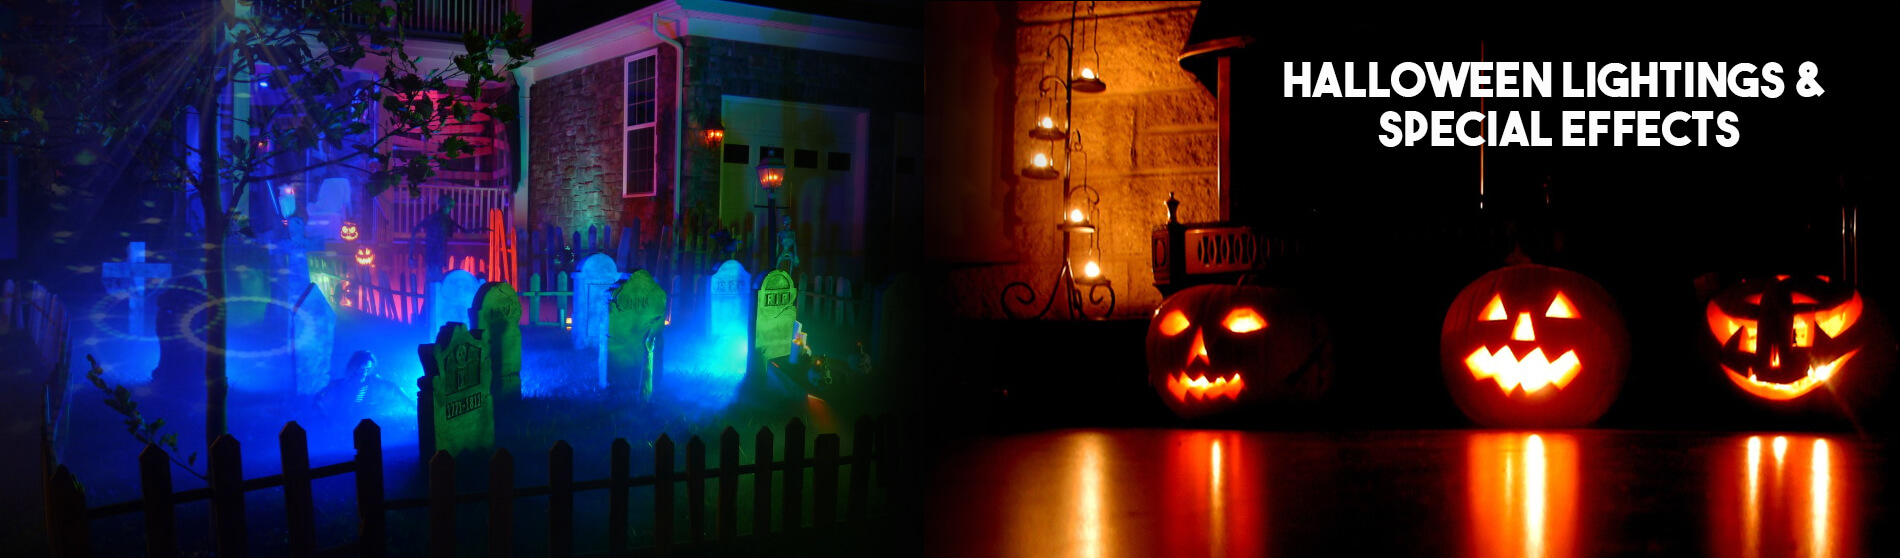 Glendale Halloween : Halloween-Lightings-Special-Effects